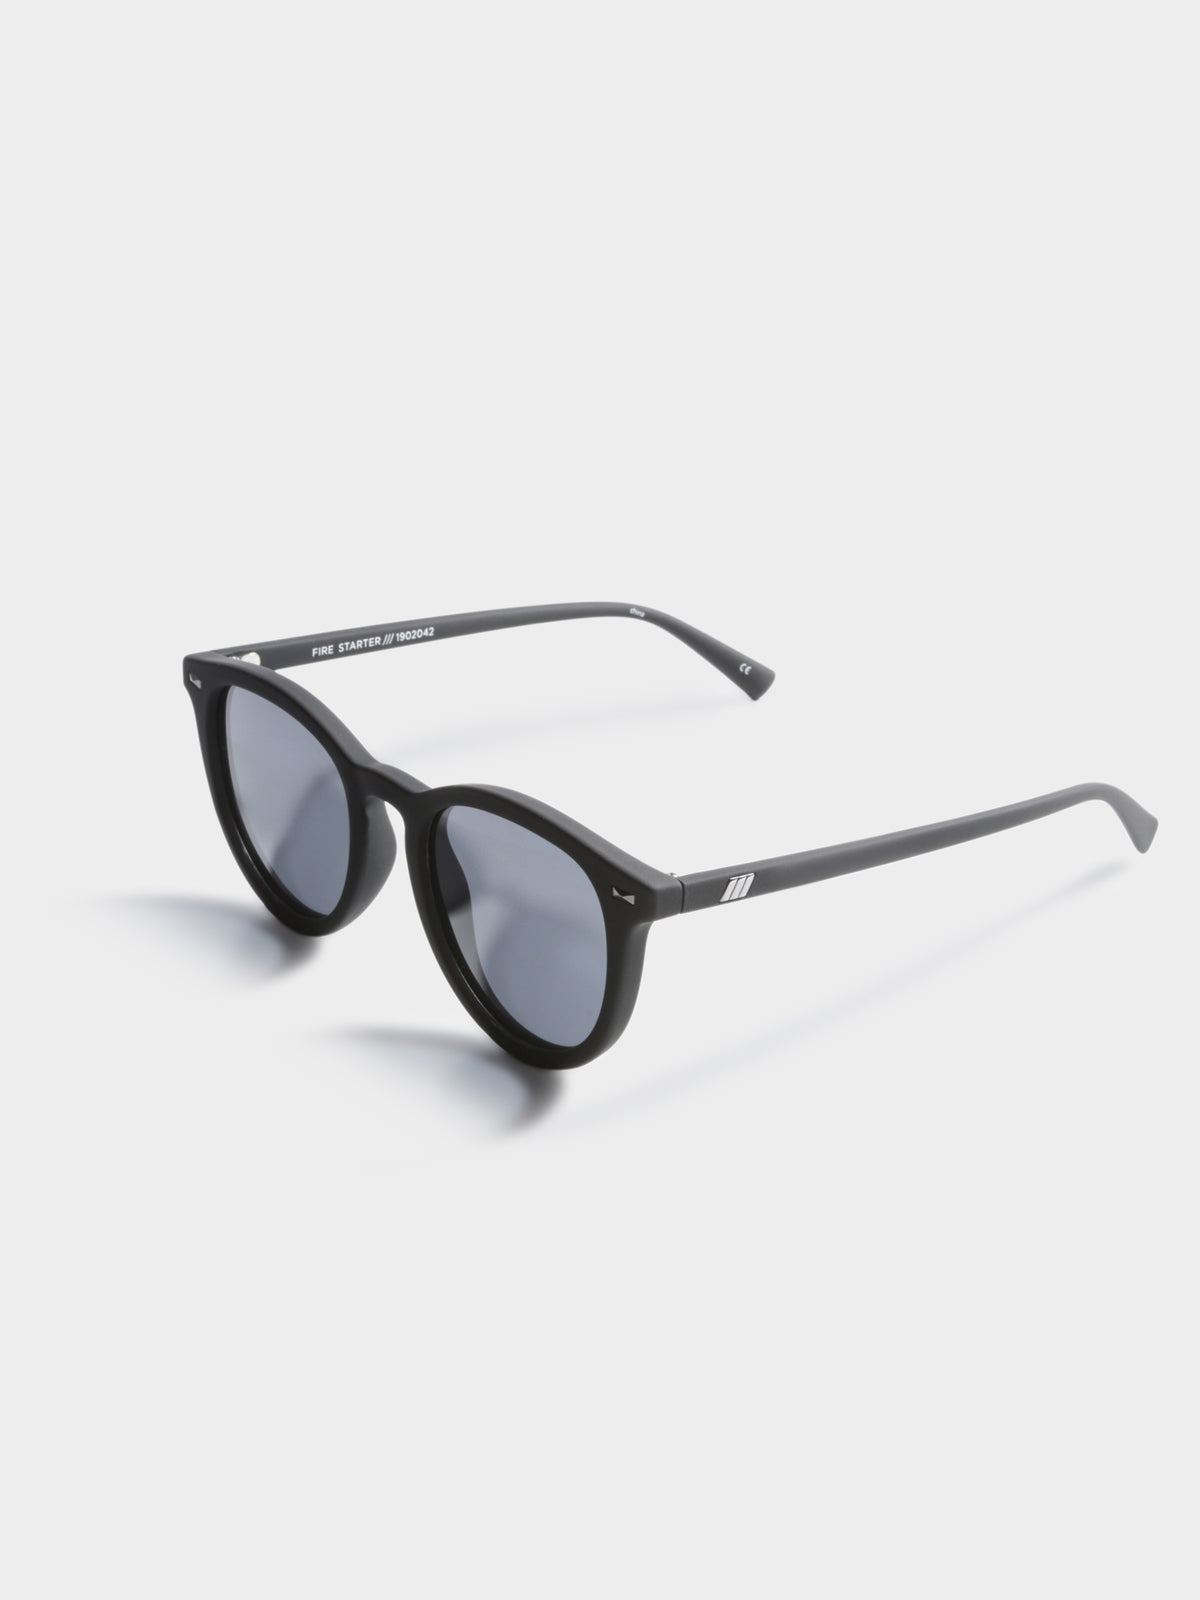 Fire Starter Polarised Sunglasses in Black Rubber